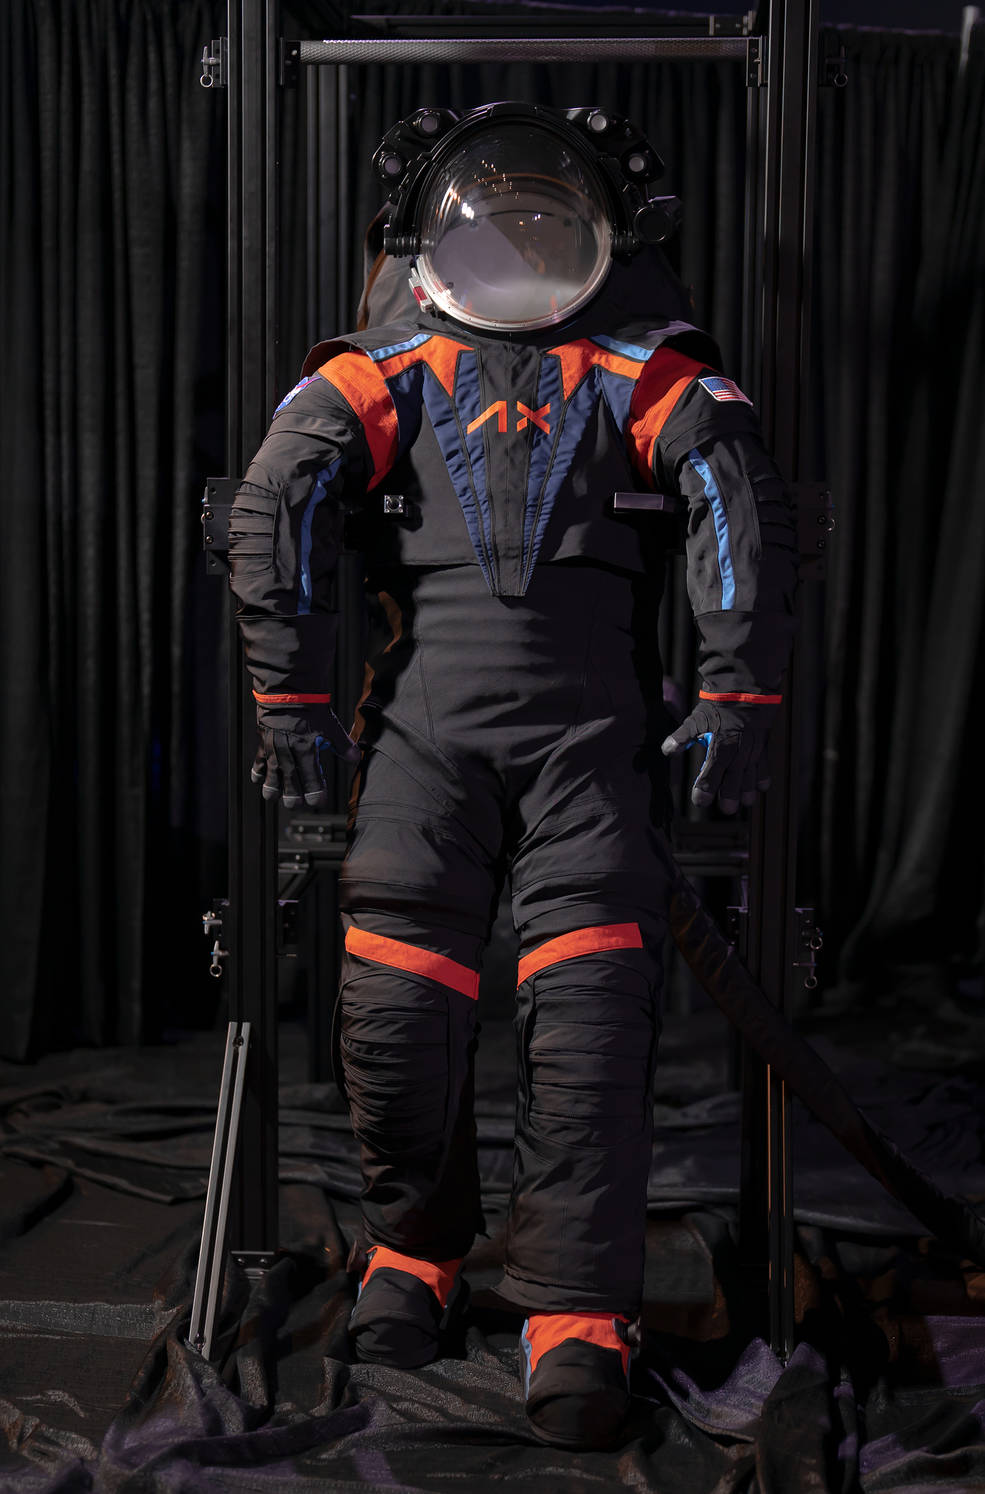 Space suit helmet cameras use Wi-Fi® to stream video